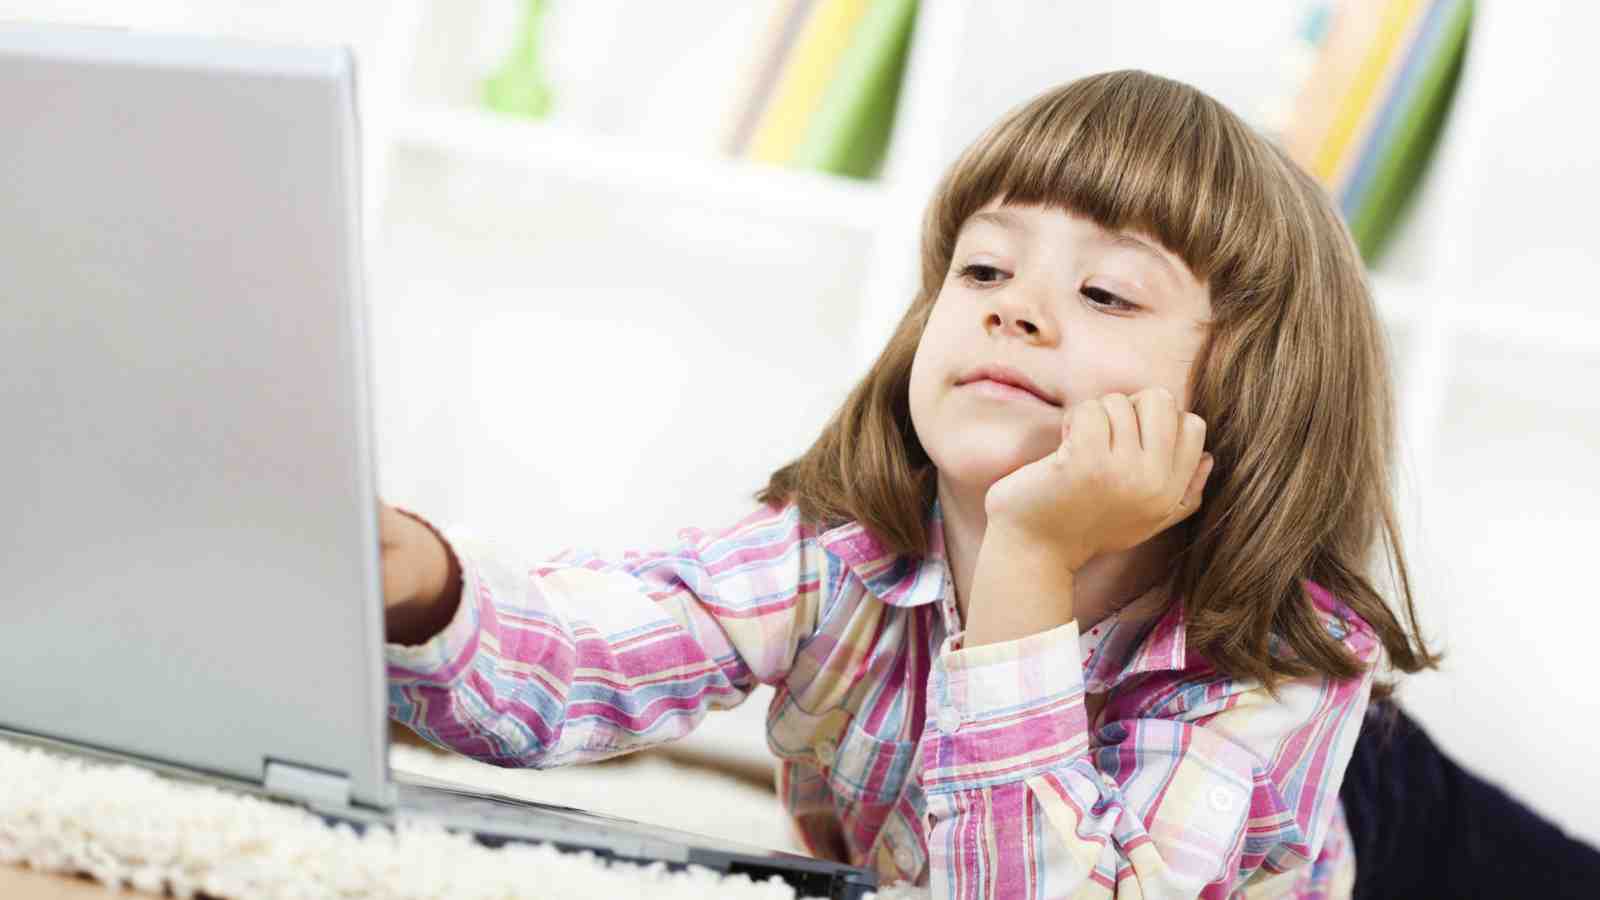 Girl looking at a computer screen